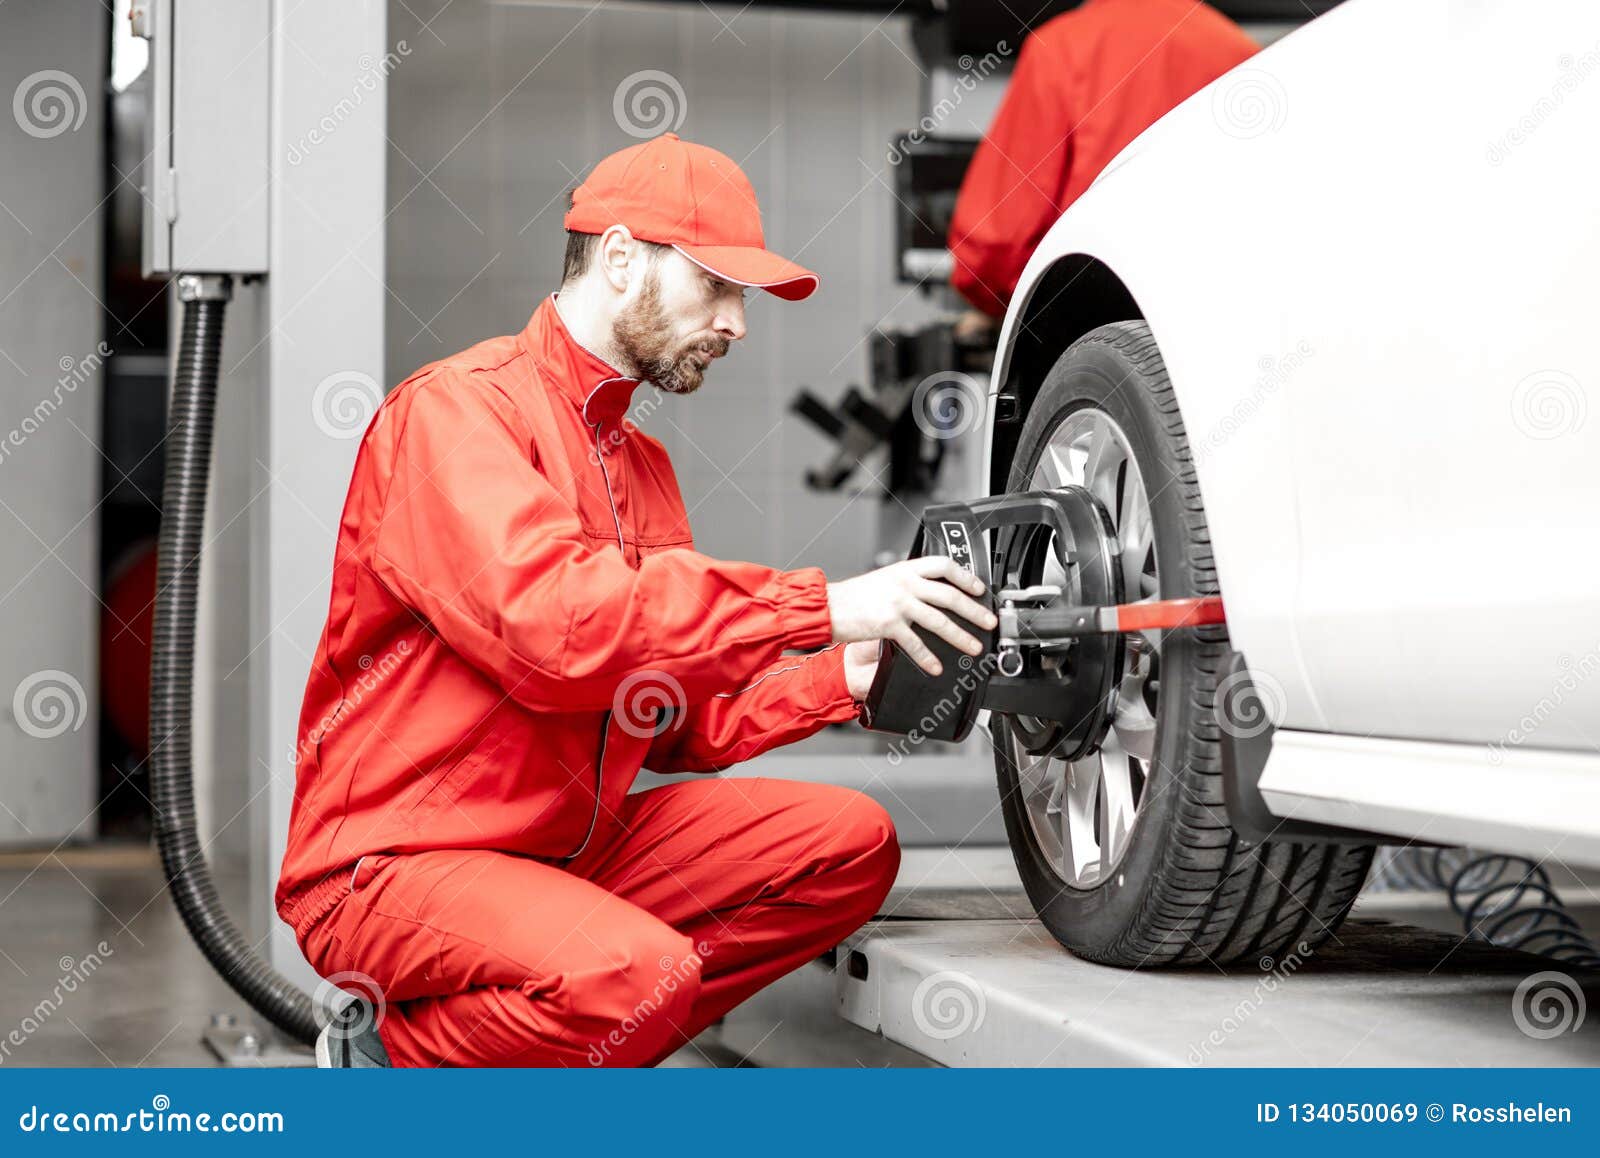 Auto Mechanics Making Wheel Alignment At The Car Service Stock Image